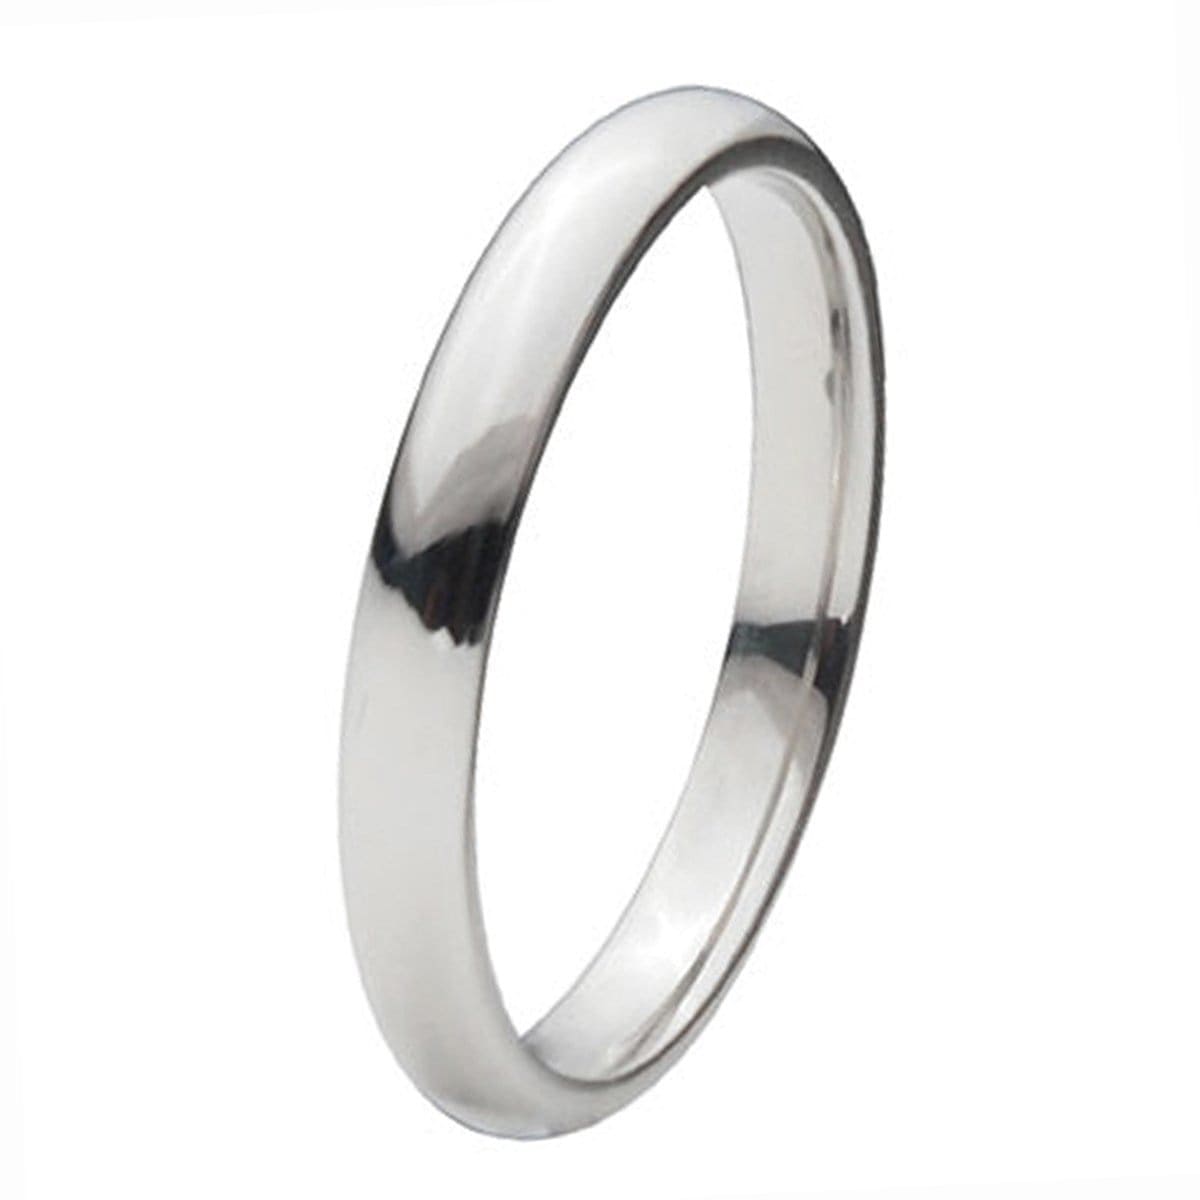 INOX JEWELRY Rings Silver Tone Titanium Classic 3mm Band Ring